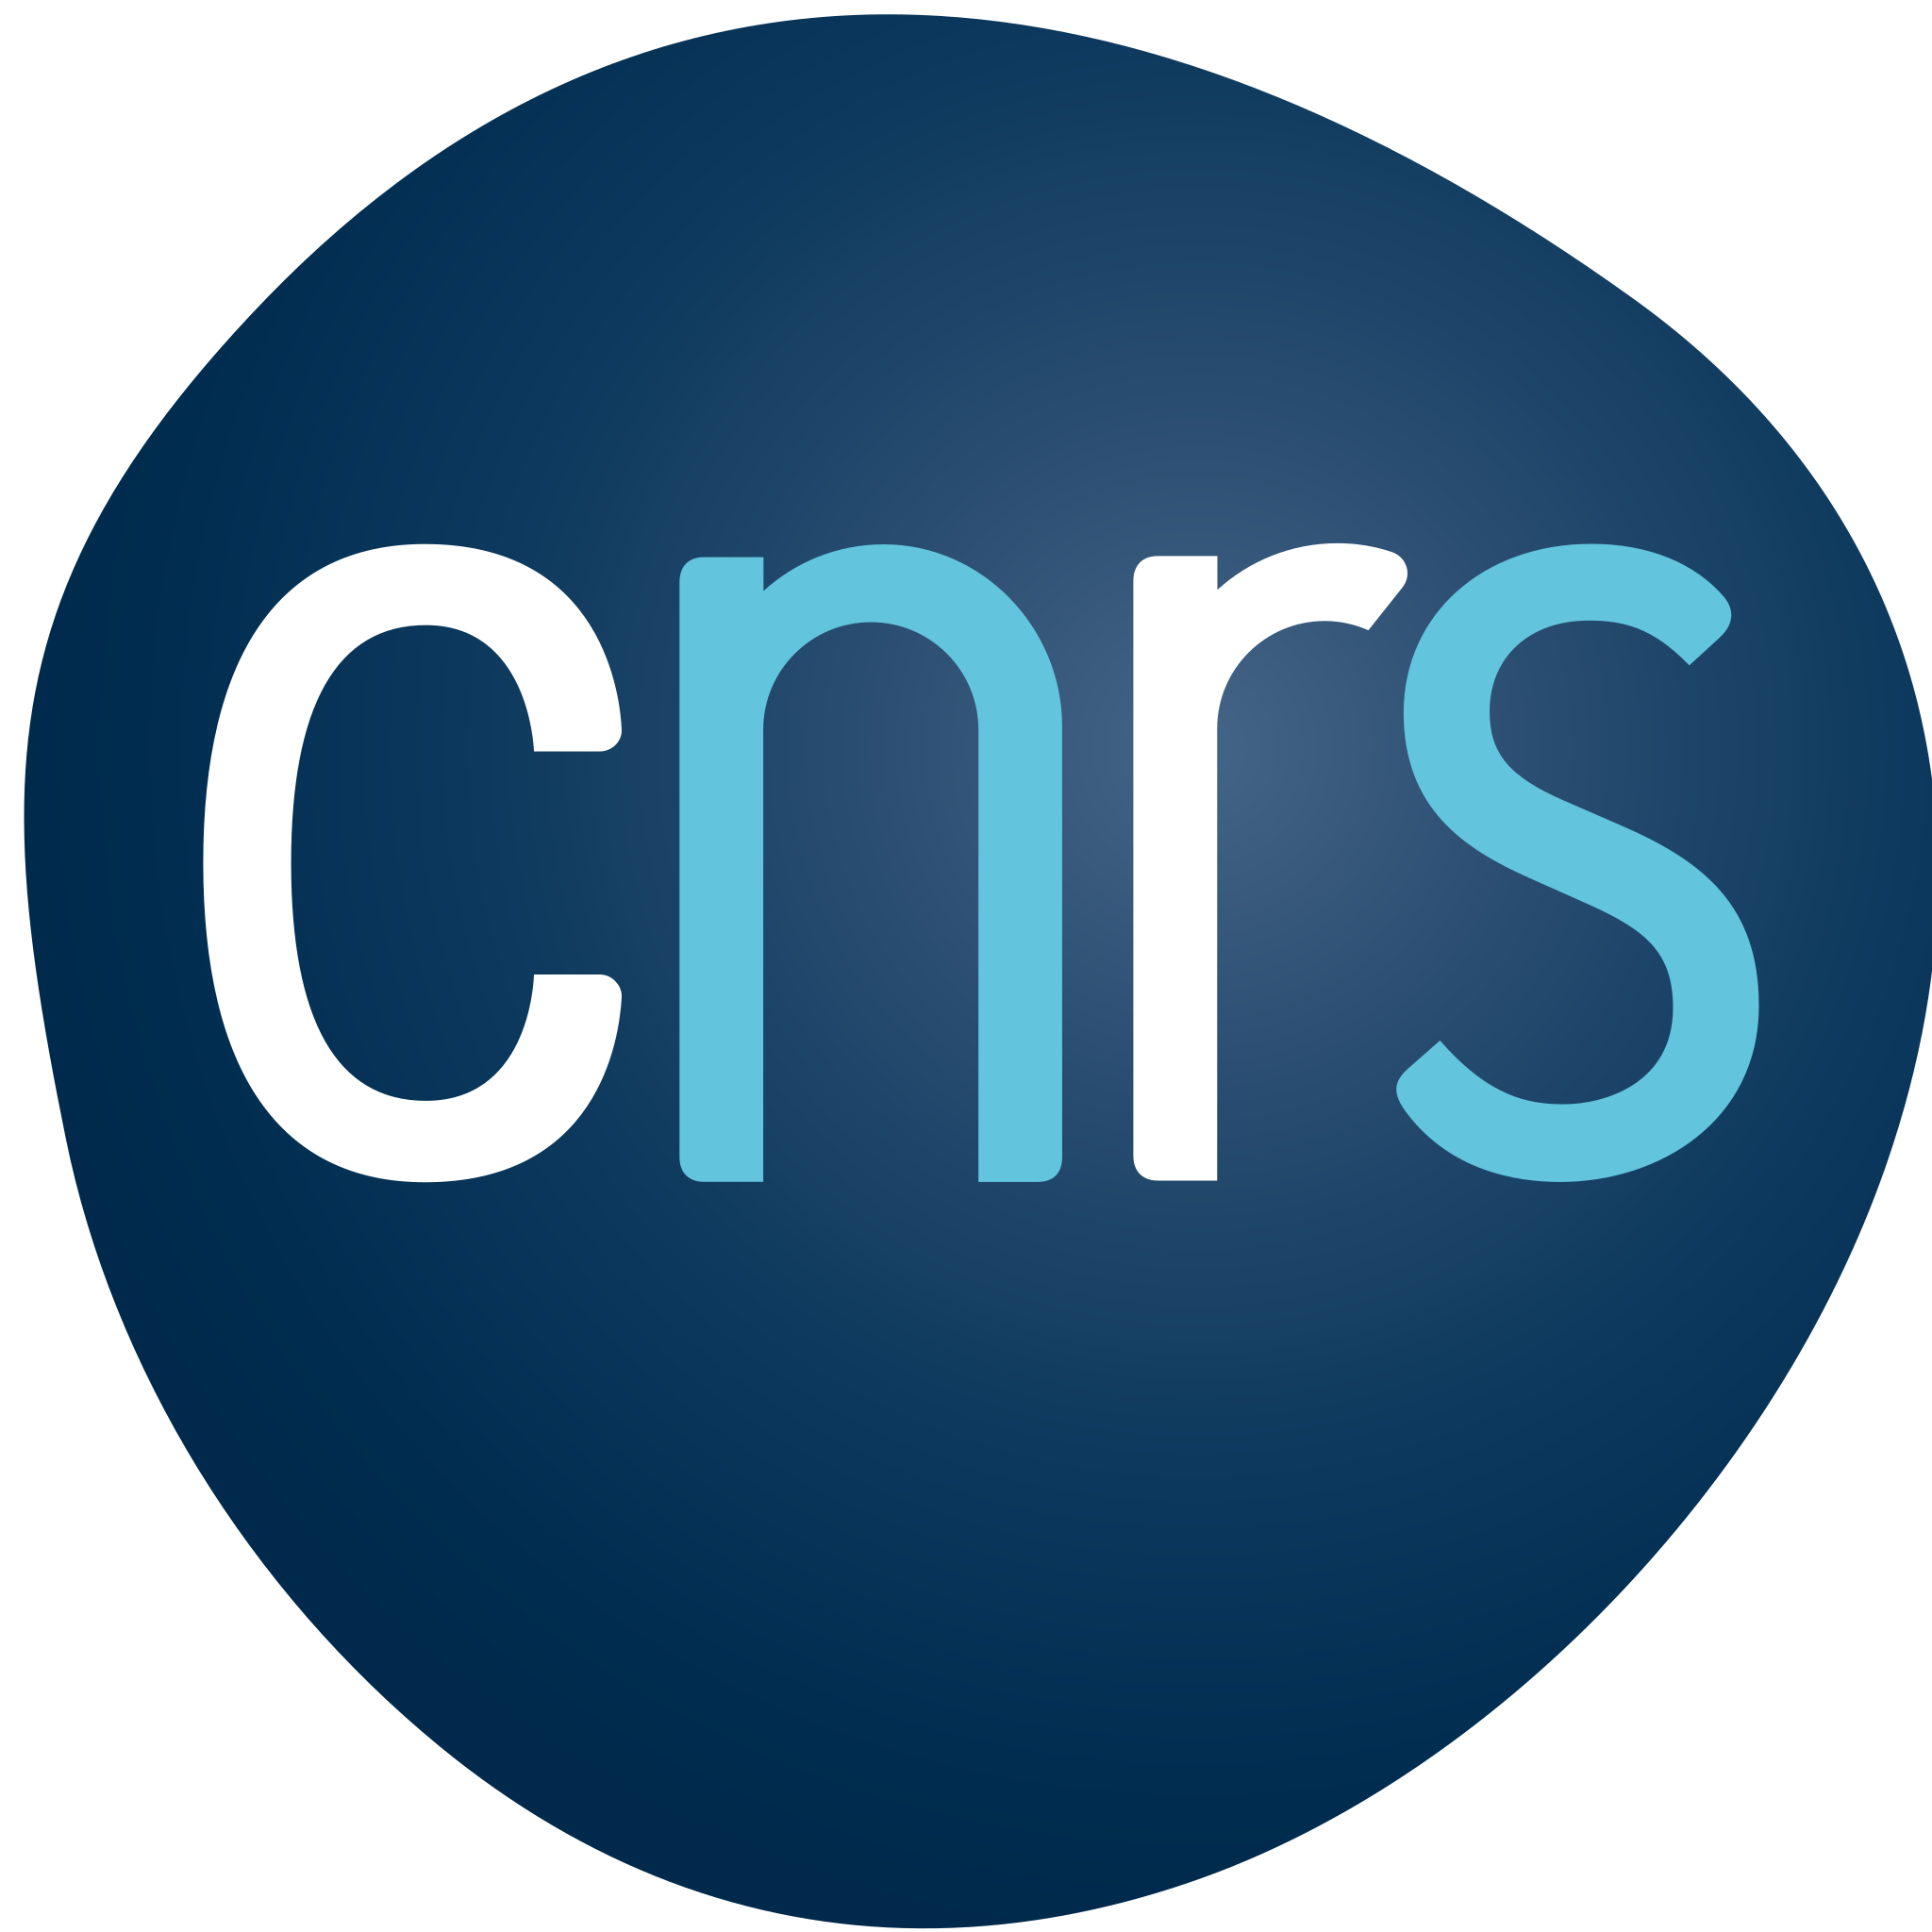 cnrs_logo